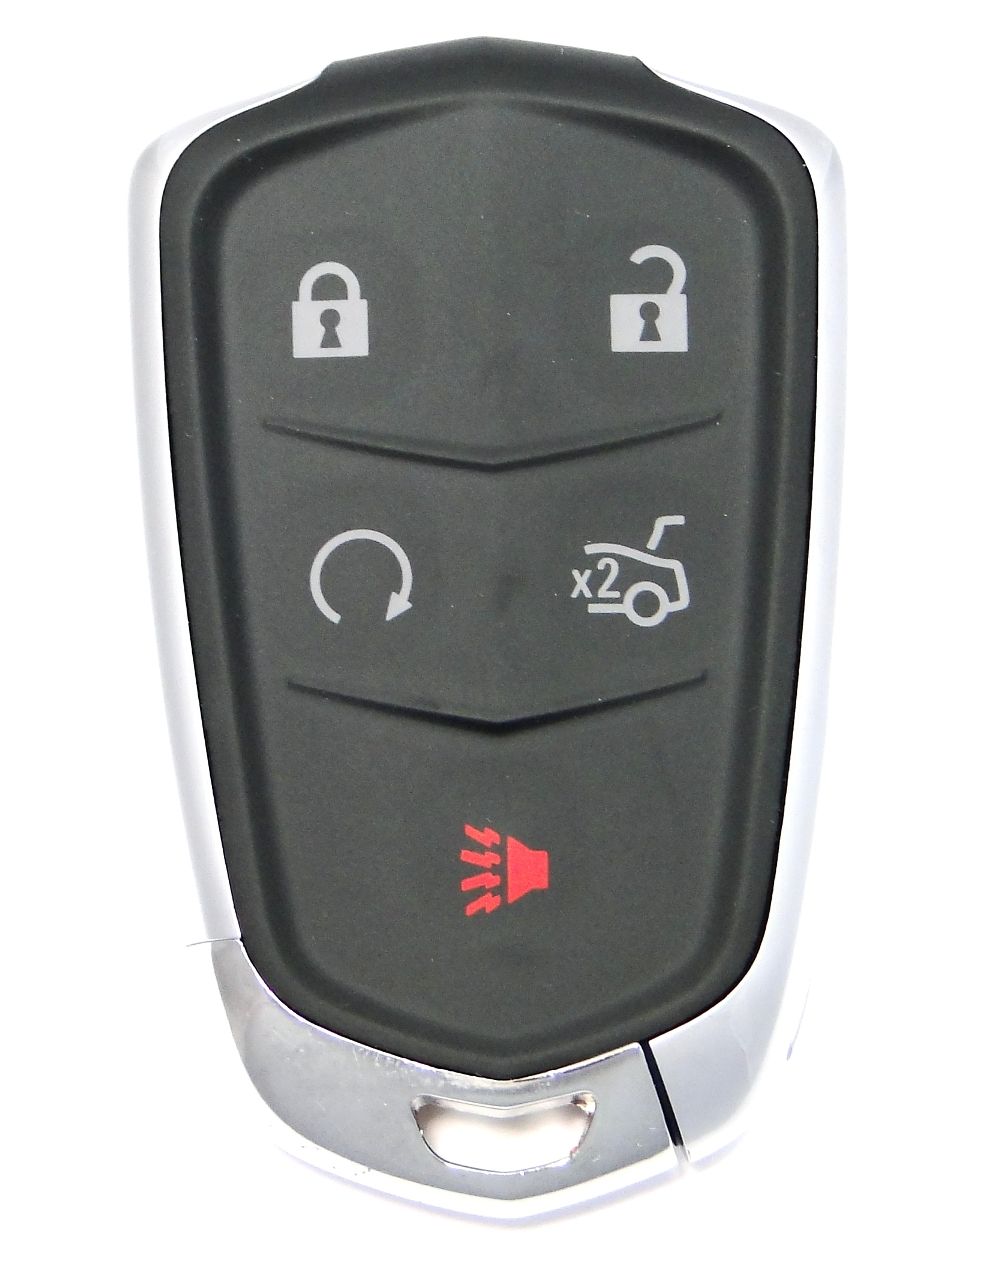 2017 Cadillac CT6 Smart Remote Key Fob - Refurbished